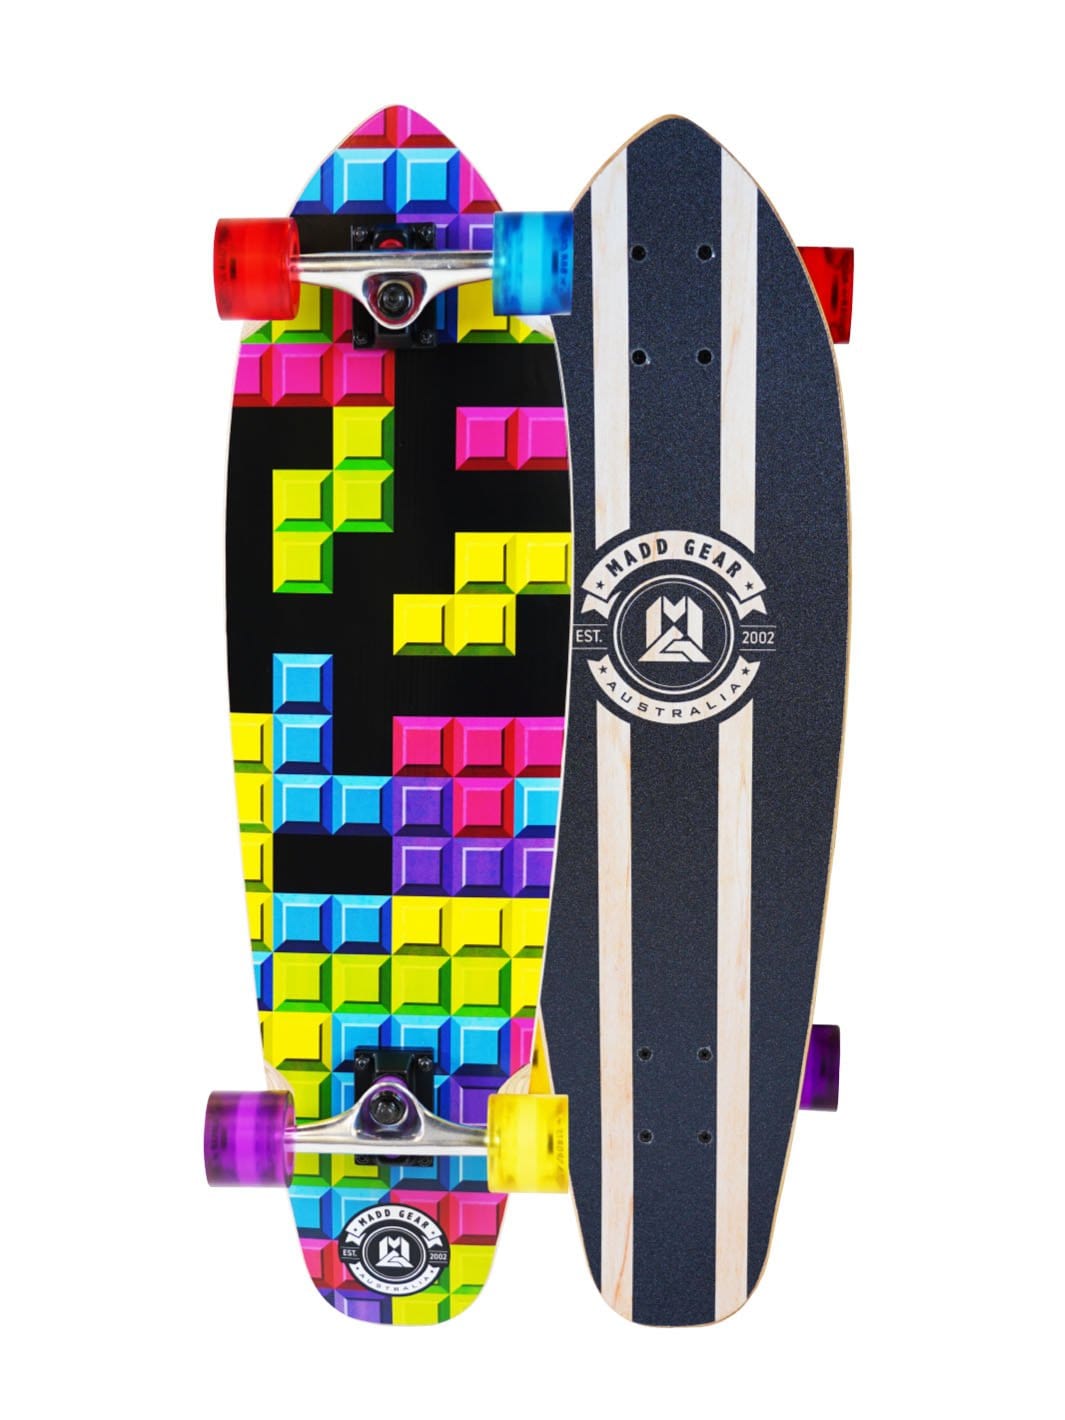 Madd Gear 32" Cruiser Board Skateboard Maple Kids Children's High Quality Aluminum Trucks Tetris